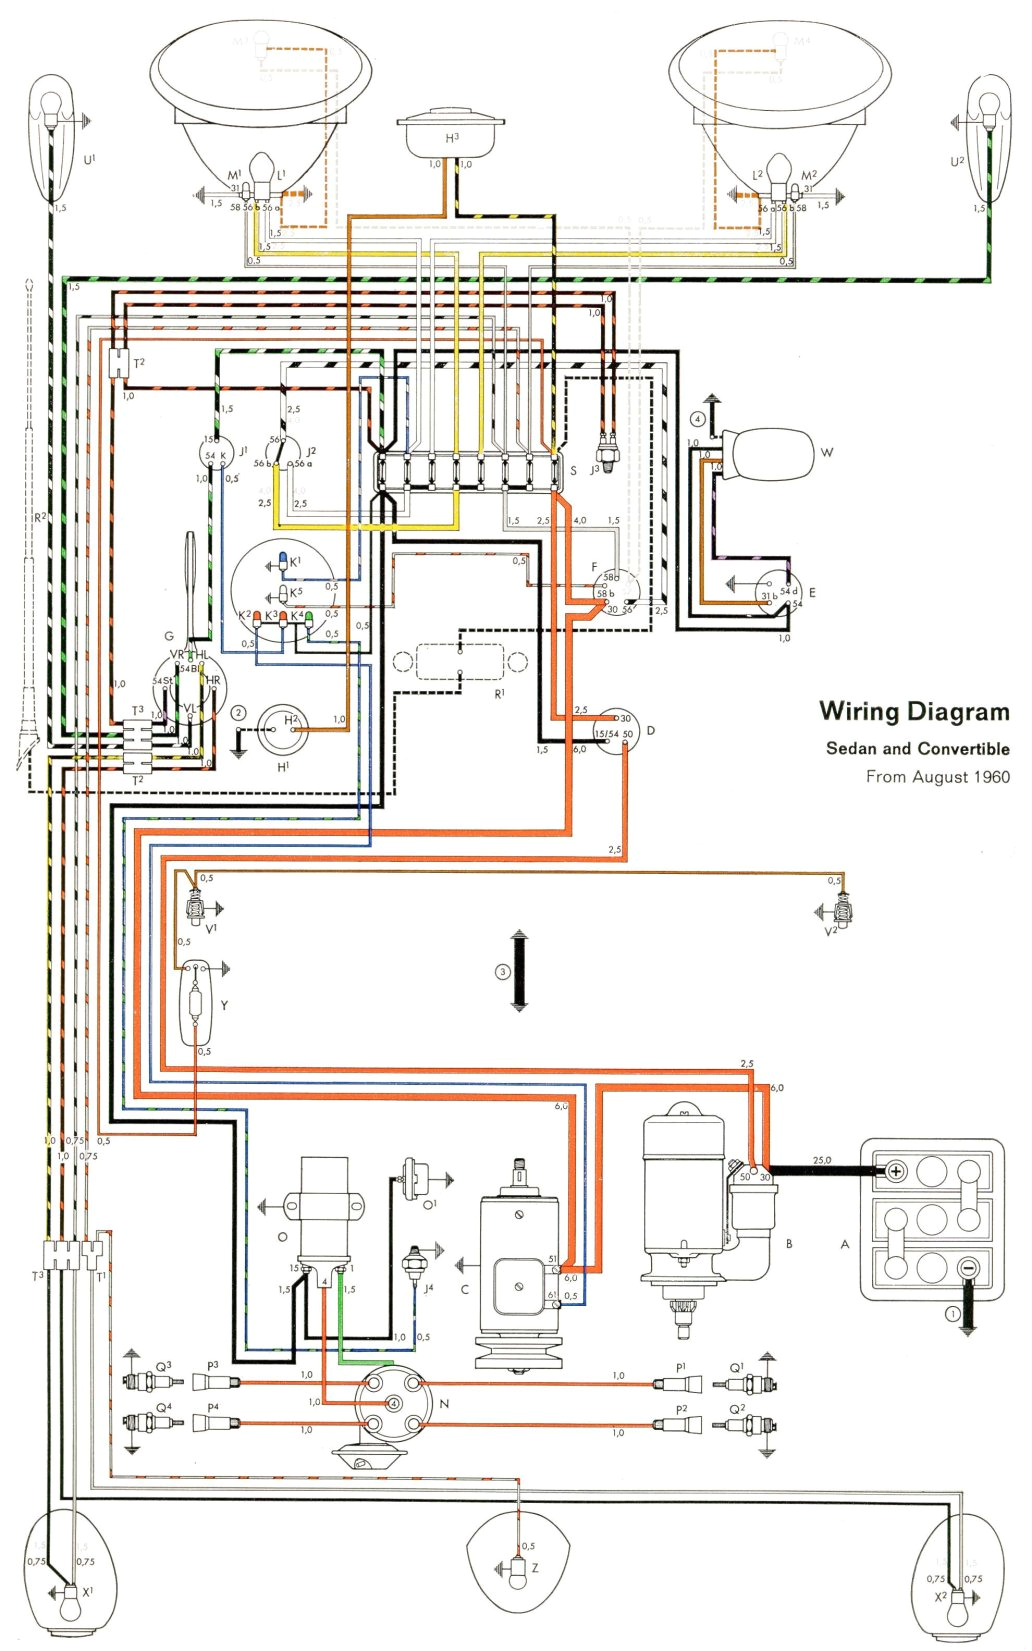 wiring diagram for volkswagen user vw caddy thesamba com type 1 t4 fresh 2 diagrams jpg